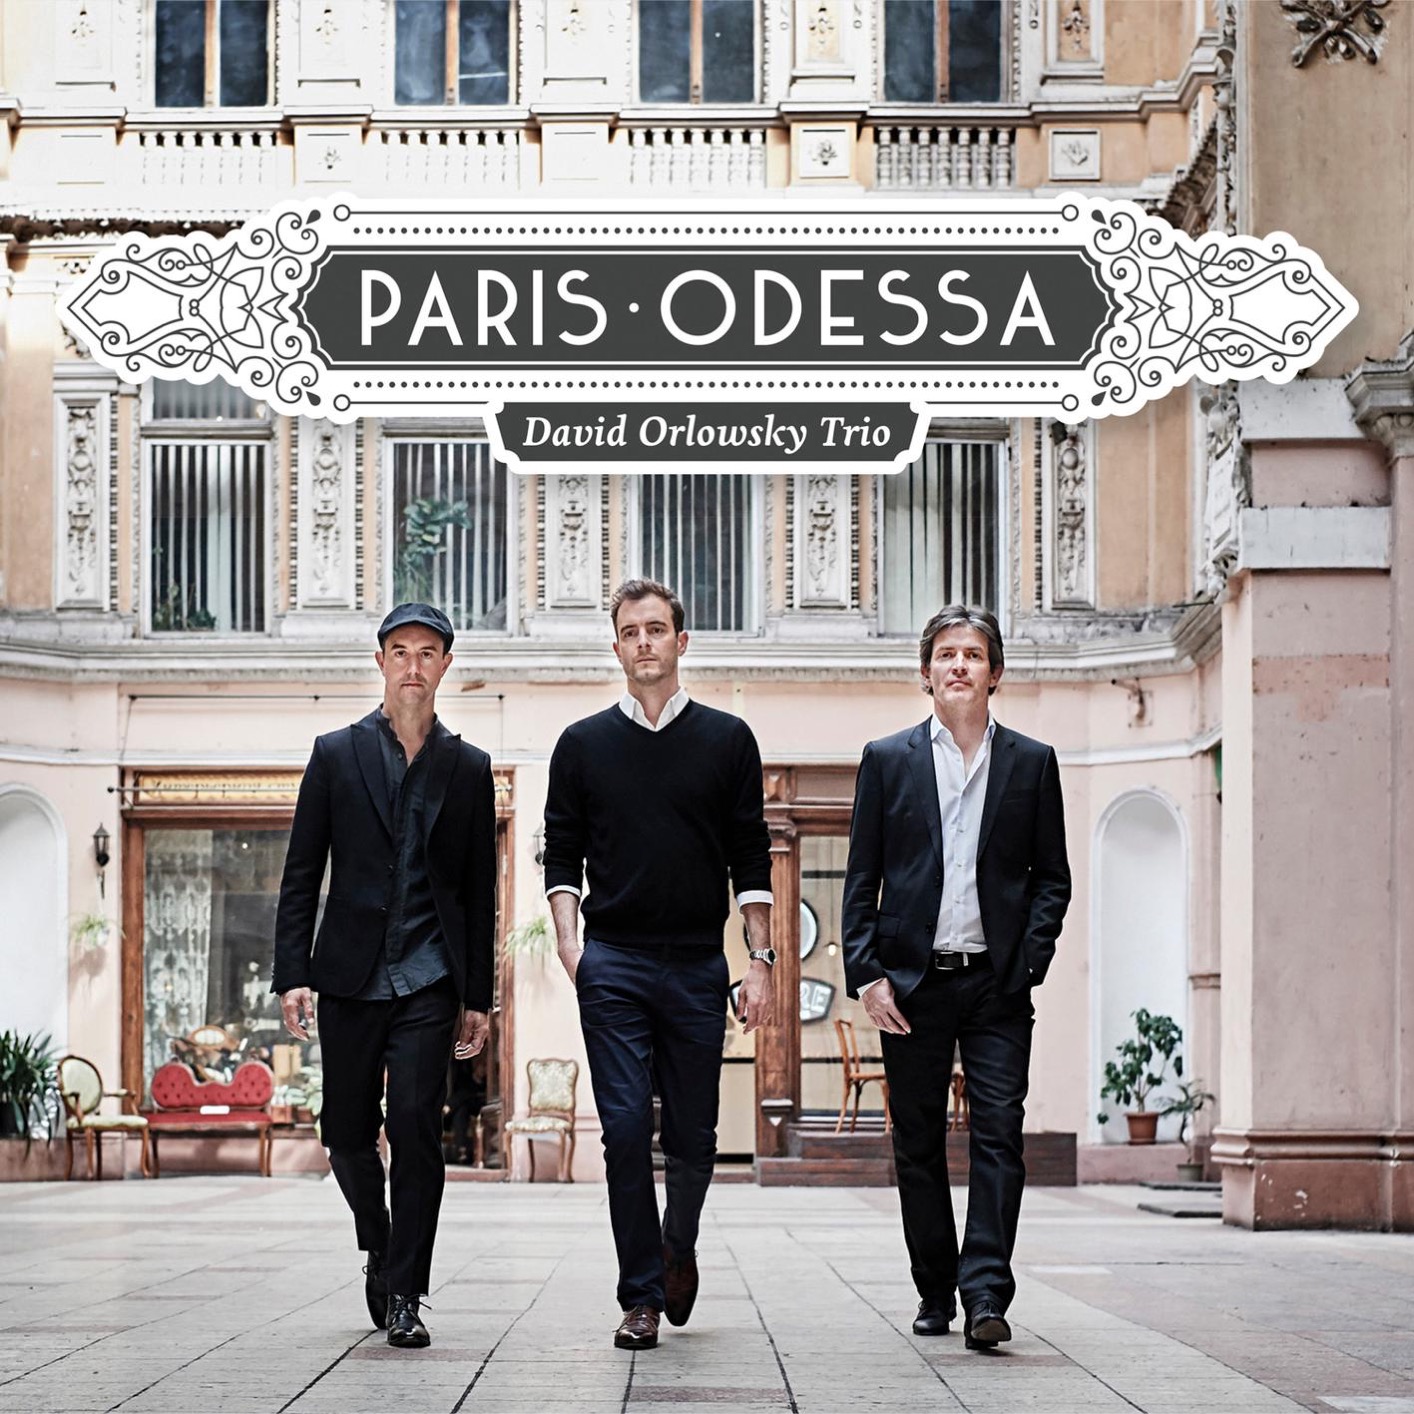 David Orlowsky Trio - Paris - Odessa (2017) [Qobuz FLAC 24bit/96kHz]